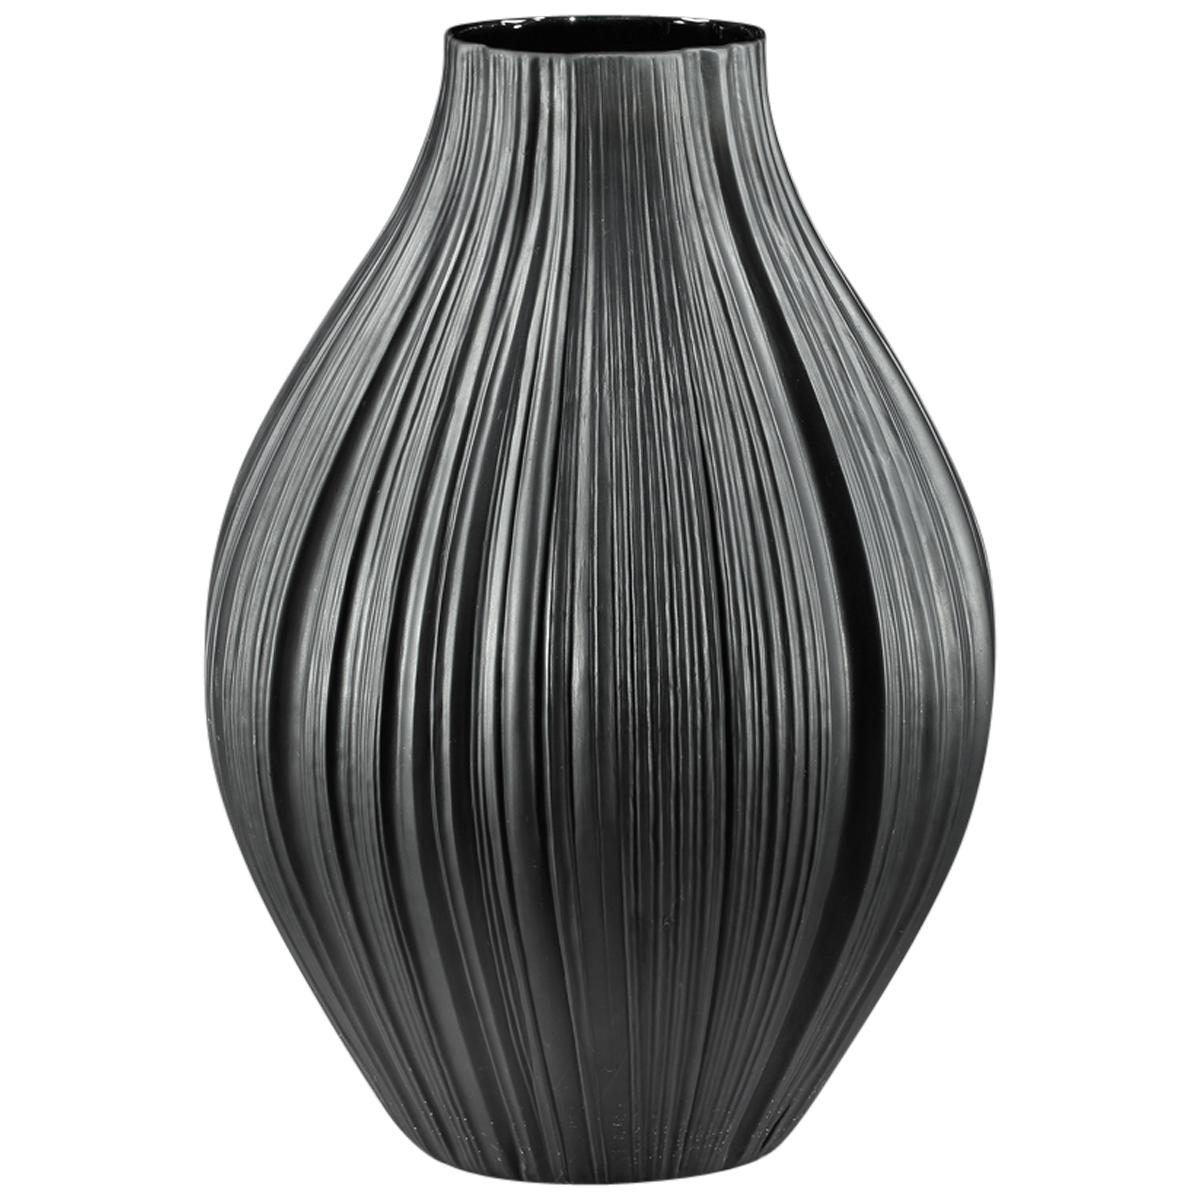 Martin Freyer Vase Porcelain Pleated Plissee Black 1968 For Sale